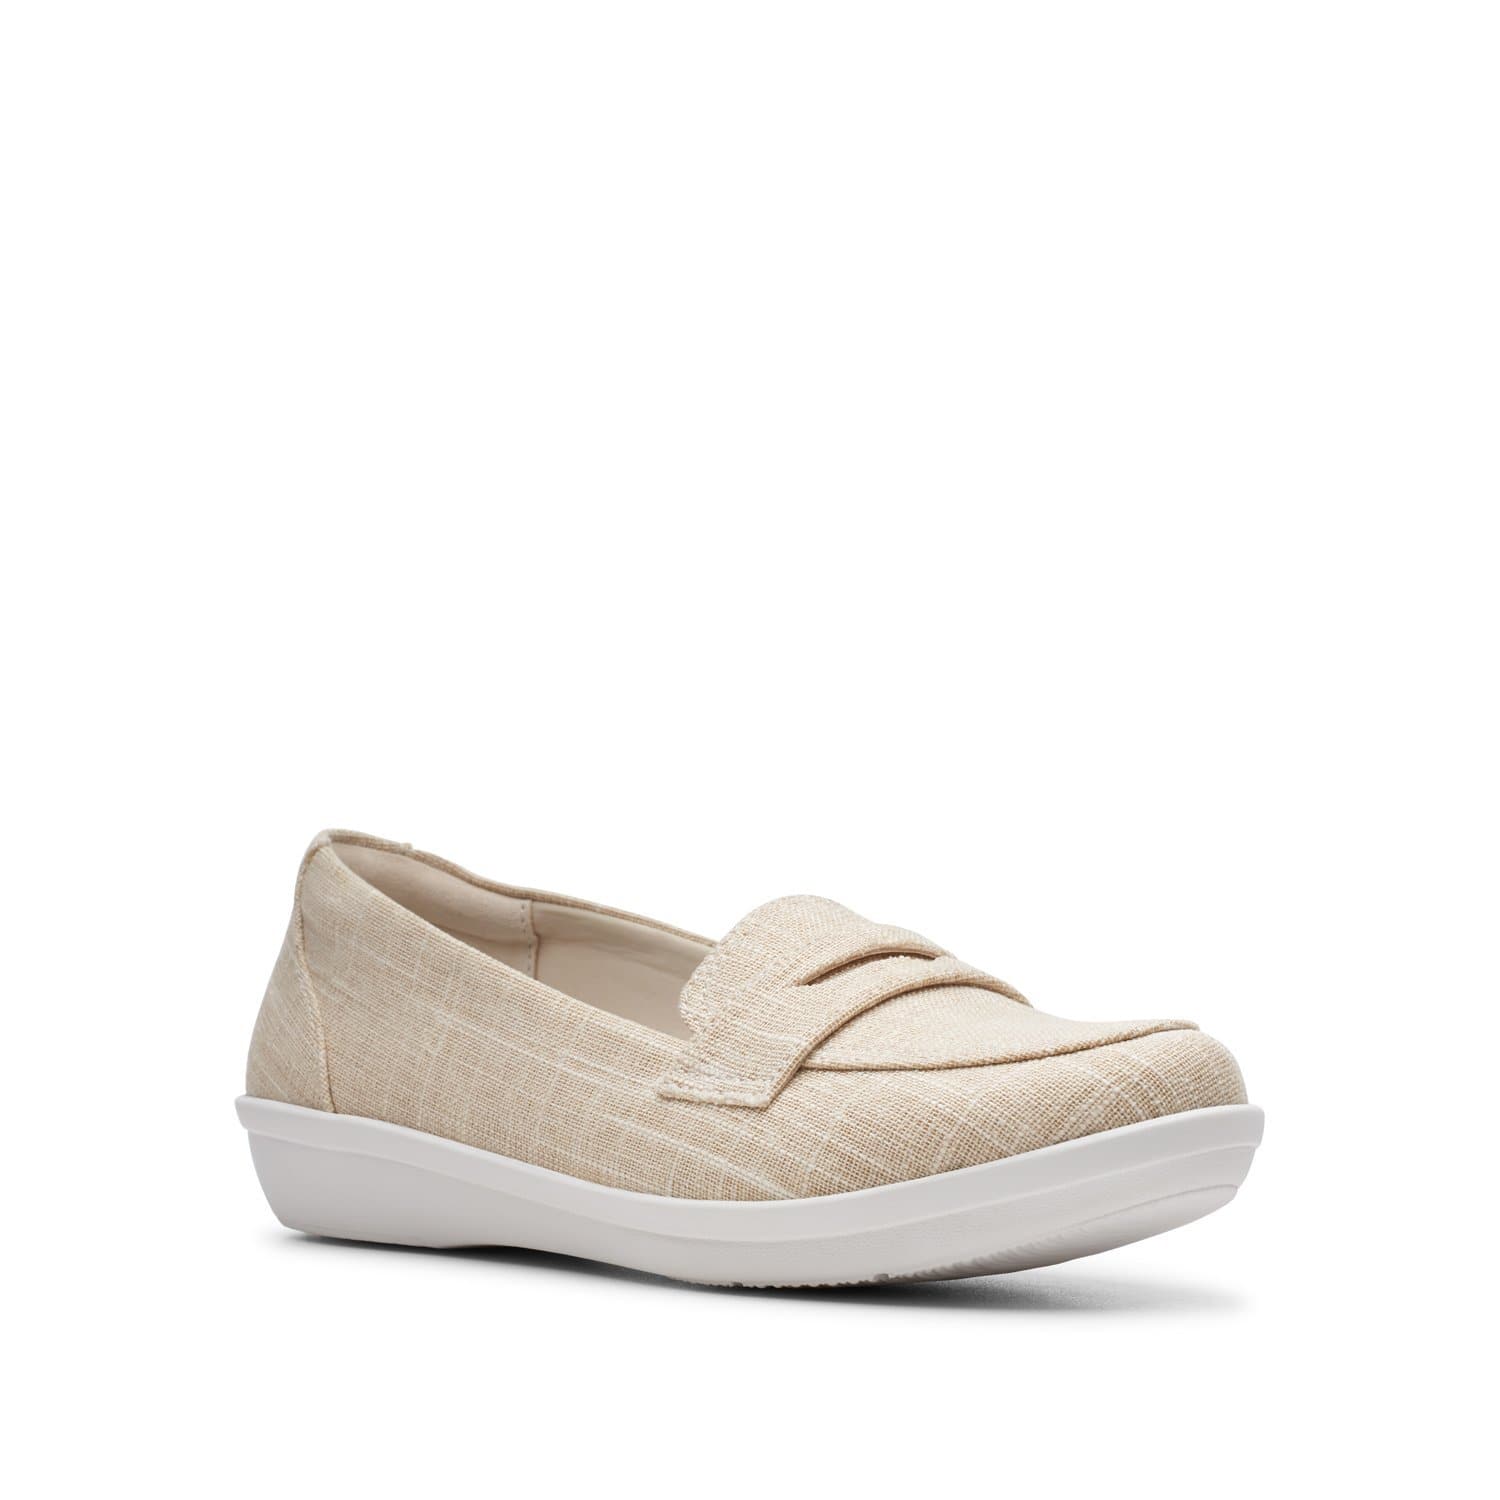 Clarks-Ayla-Form-Women's-Shoes-Natural-Linen-26147499